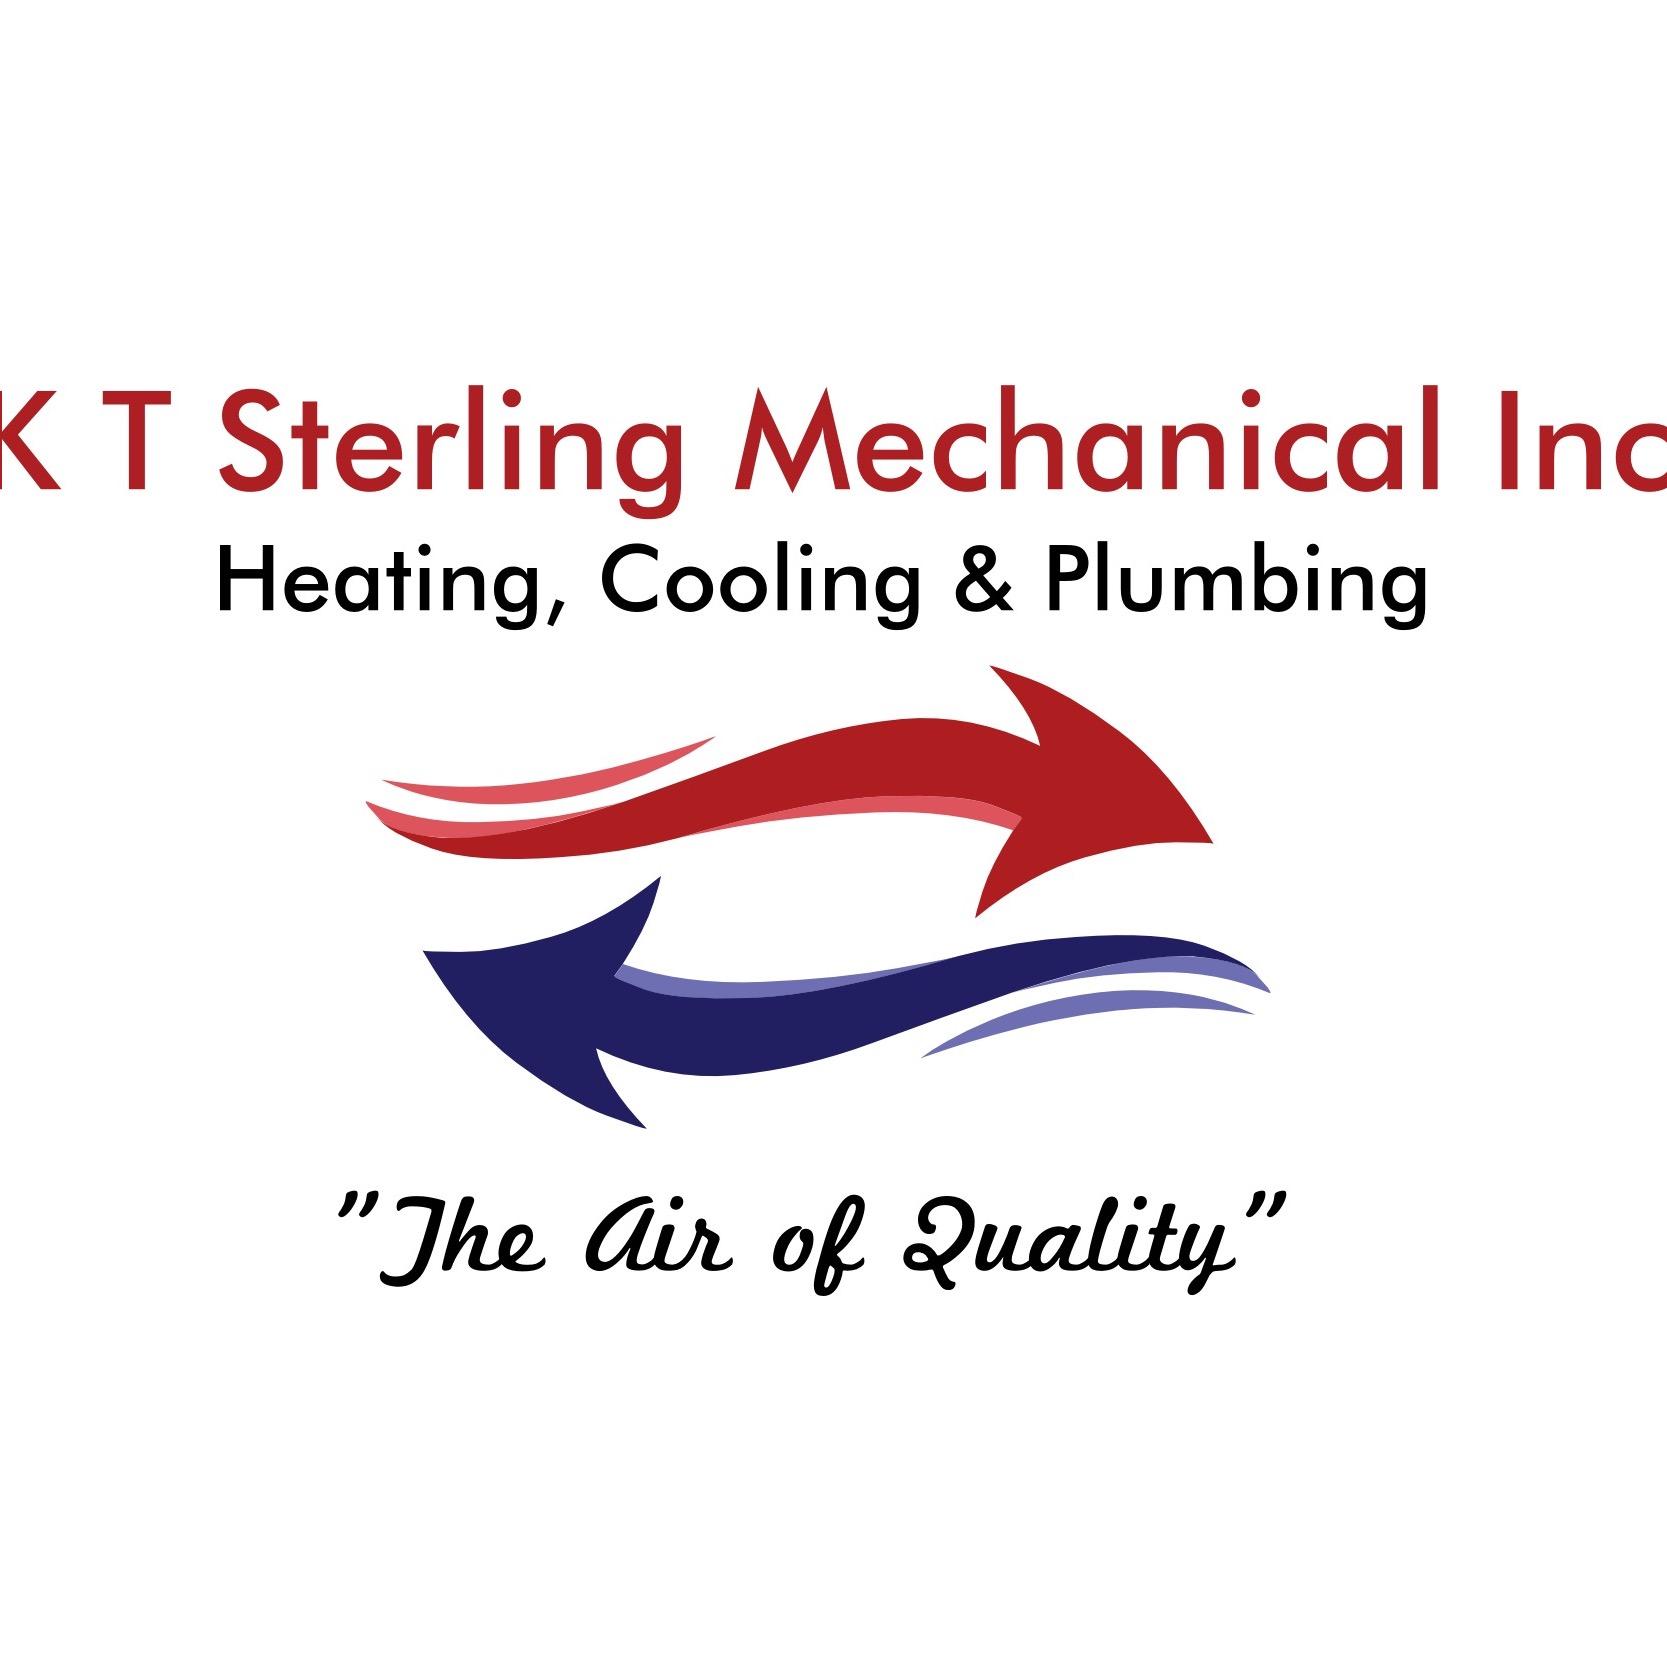 K T Sterling Mechanical Inc Photo